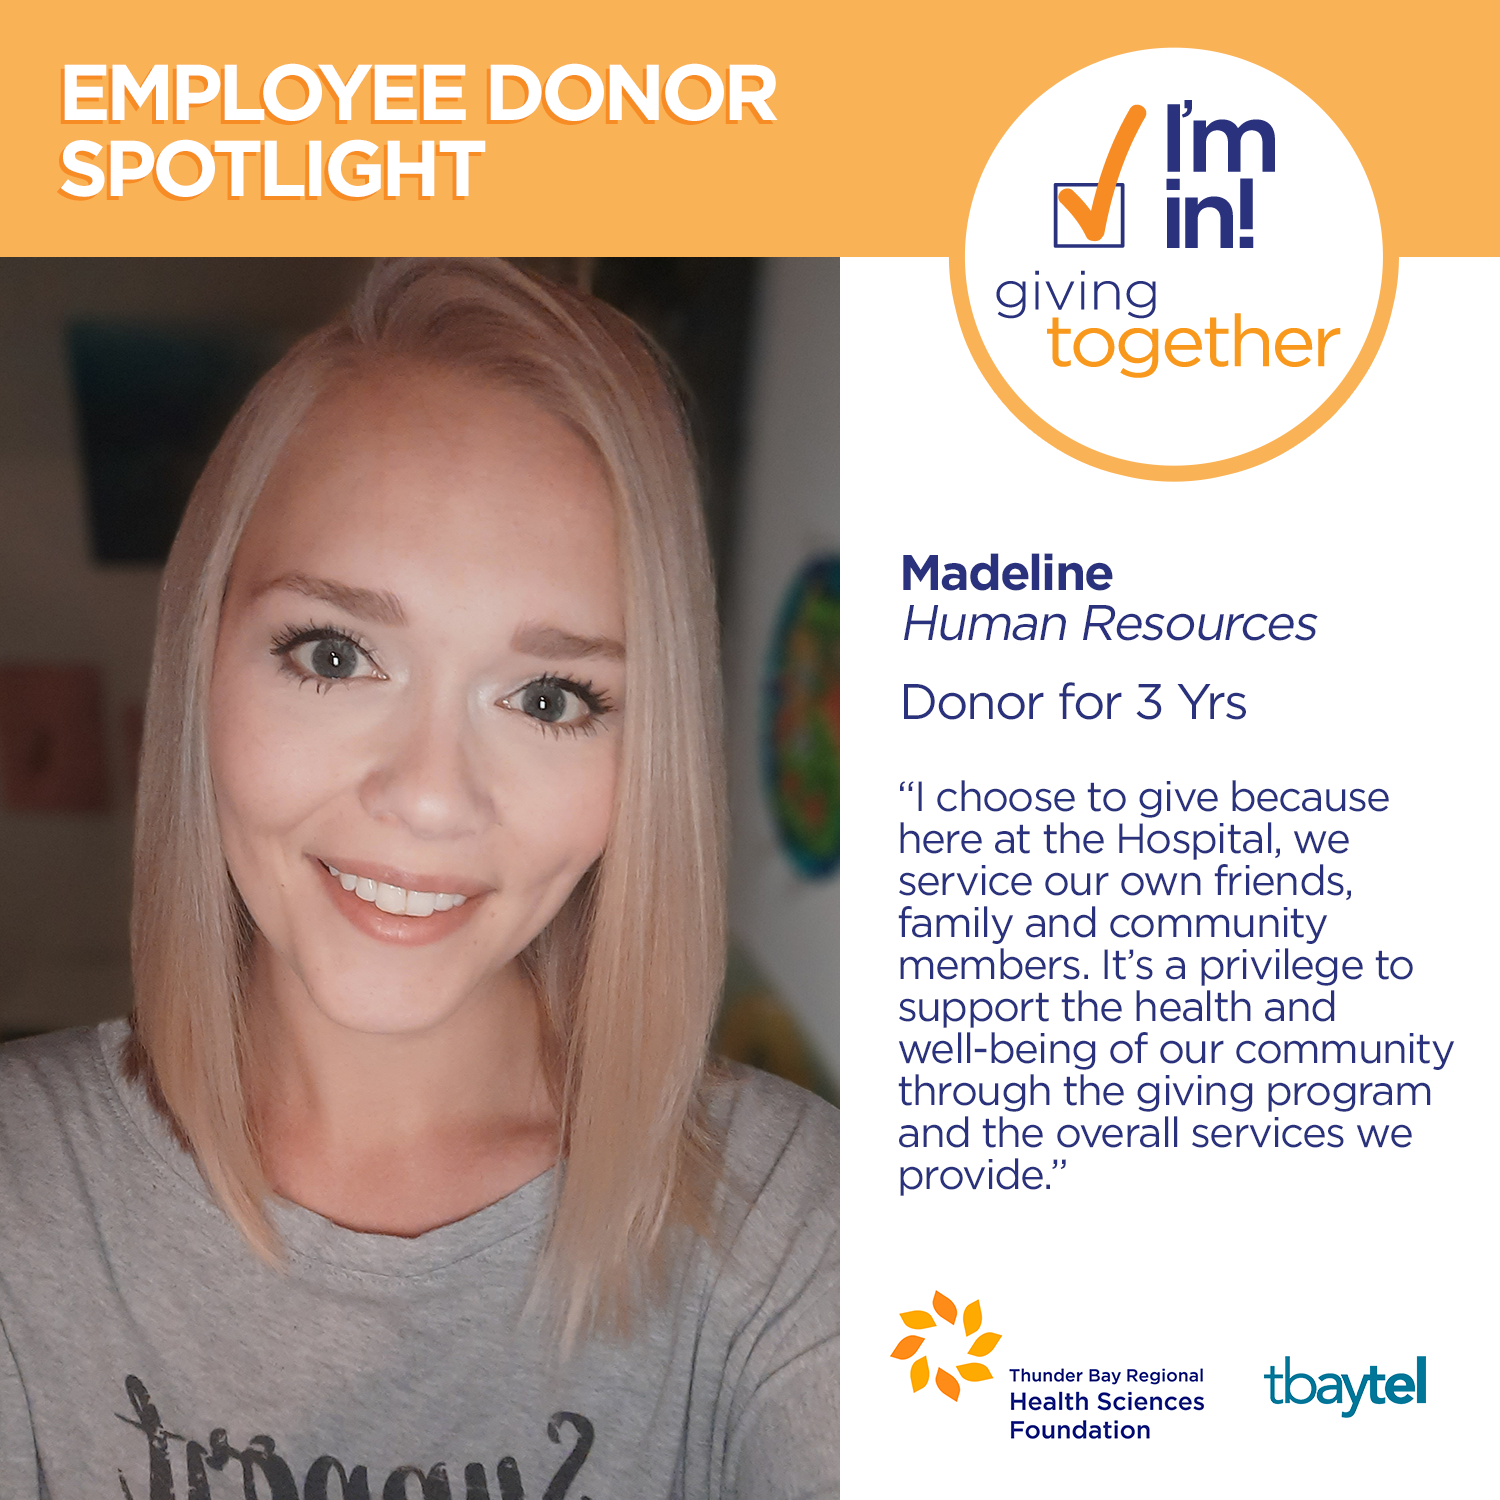 Employee Donor Spotlight: Madeline